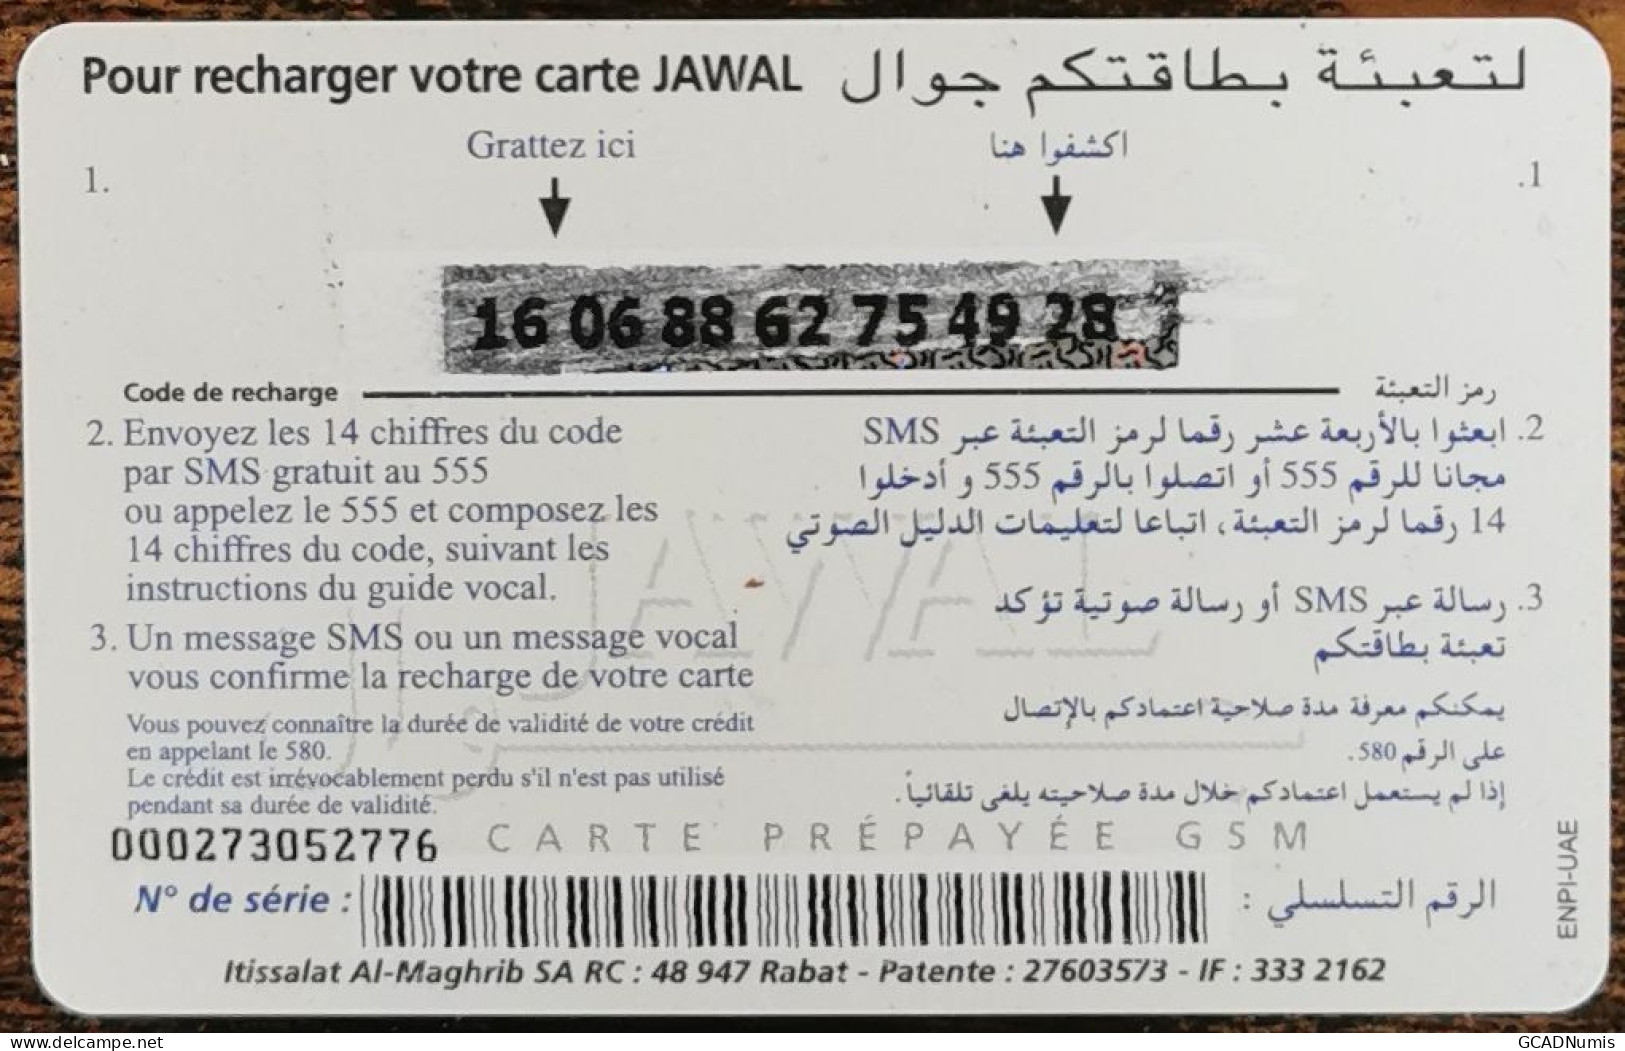 Carte De Recharge - Jawal Champions Des Coeurs 50+5Dh Maroc - Télécarte ~47 - Marruecos